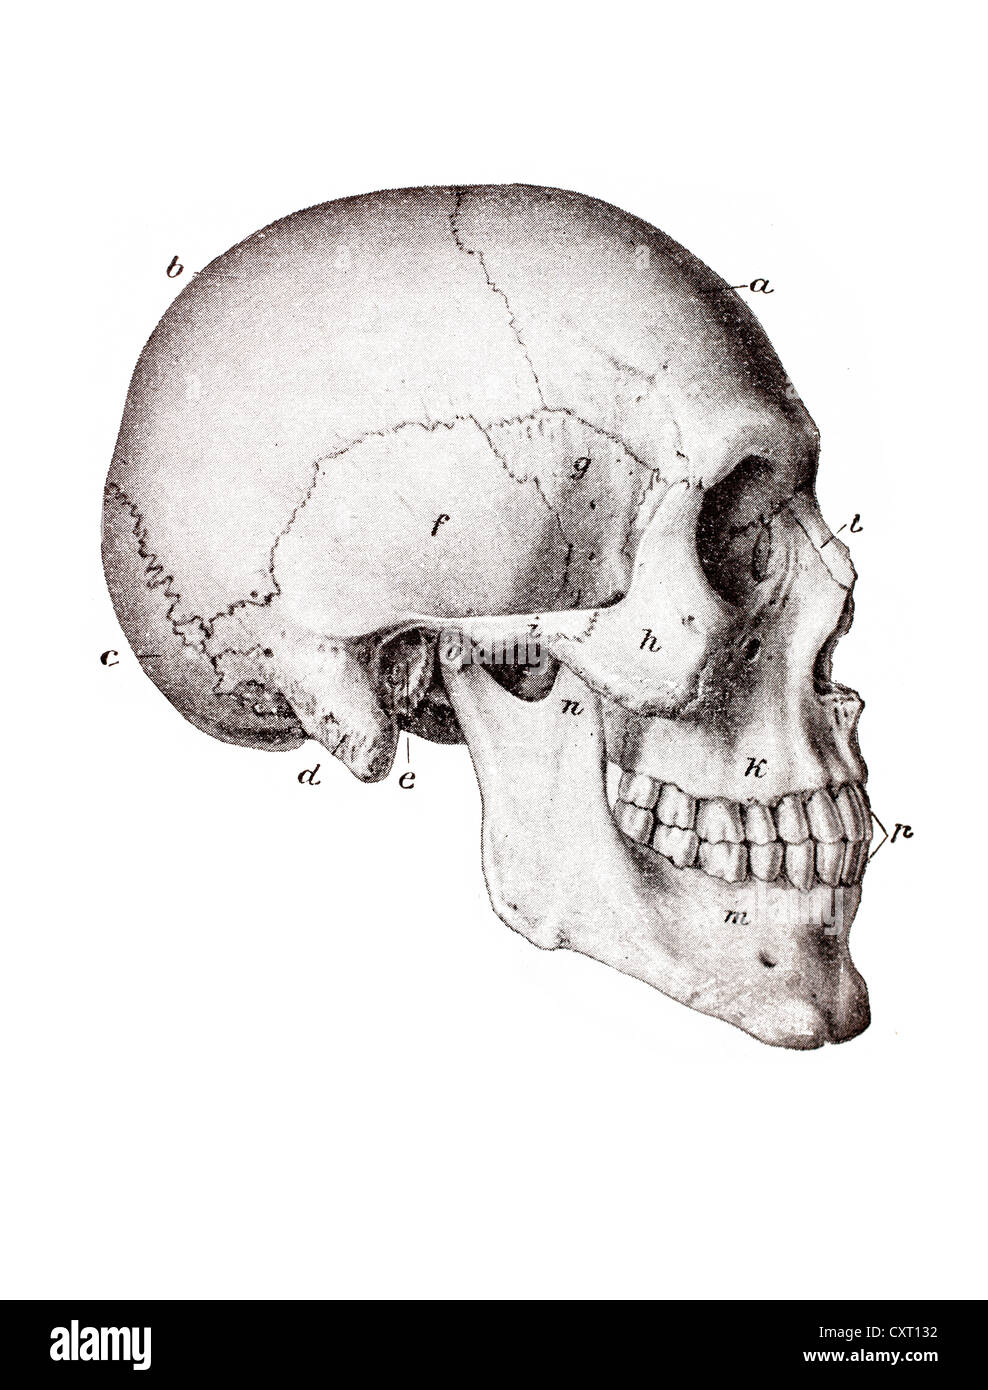 Skull of a Homo sapiens, anatomical illustration Stock Photo